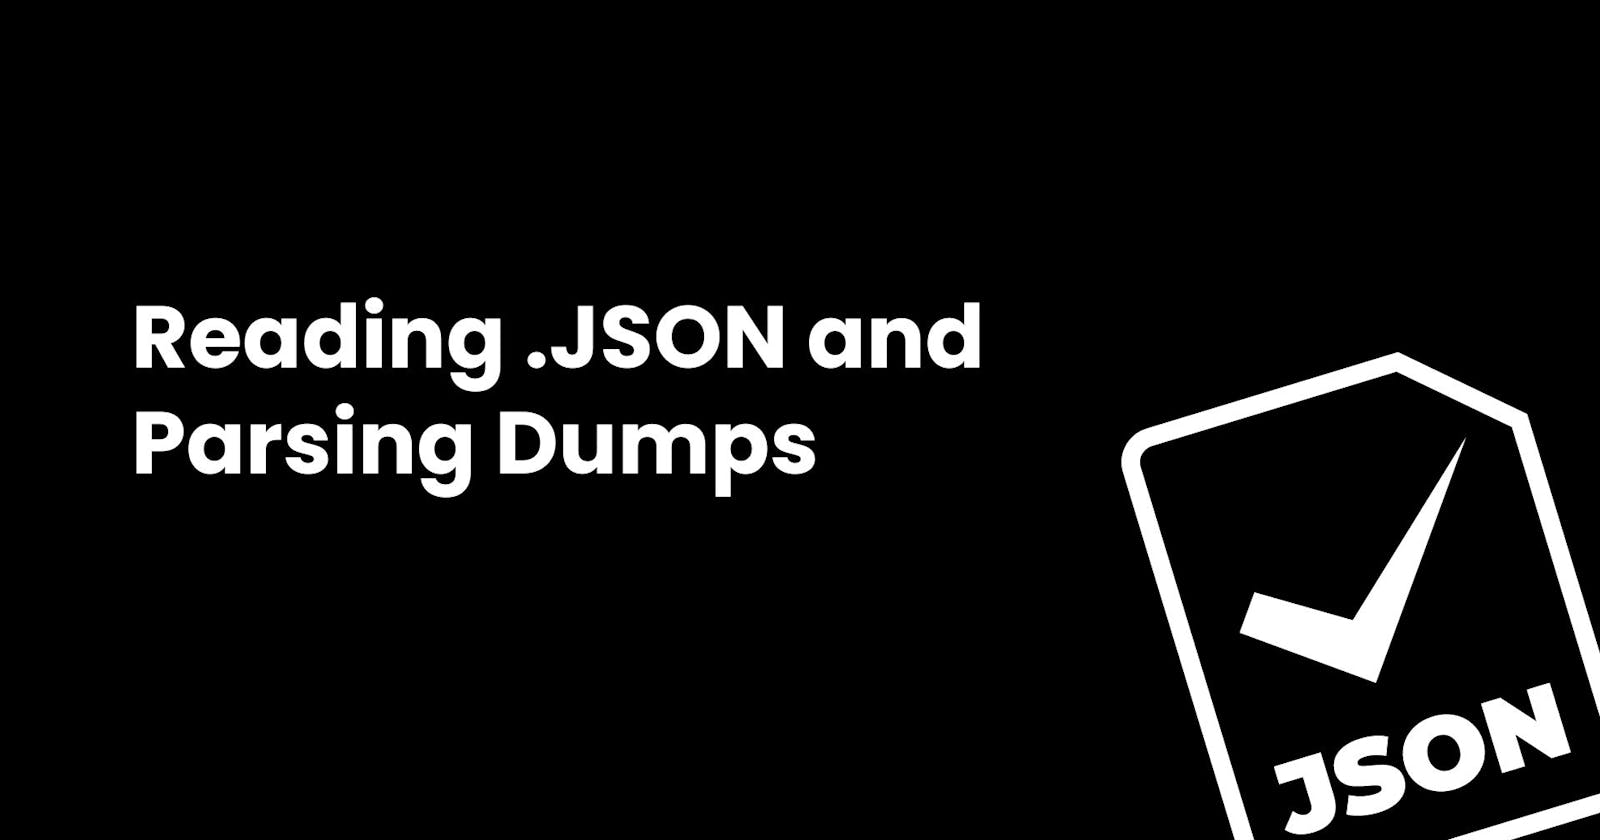 Reading JSON and Parsing dumps